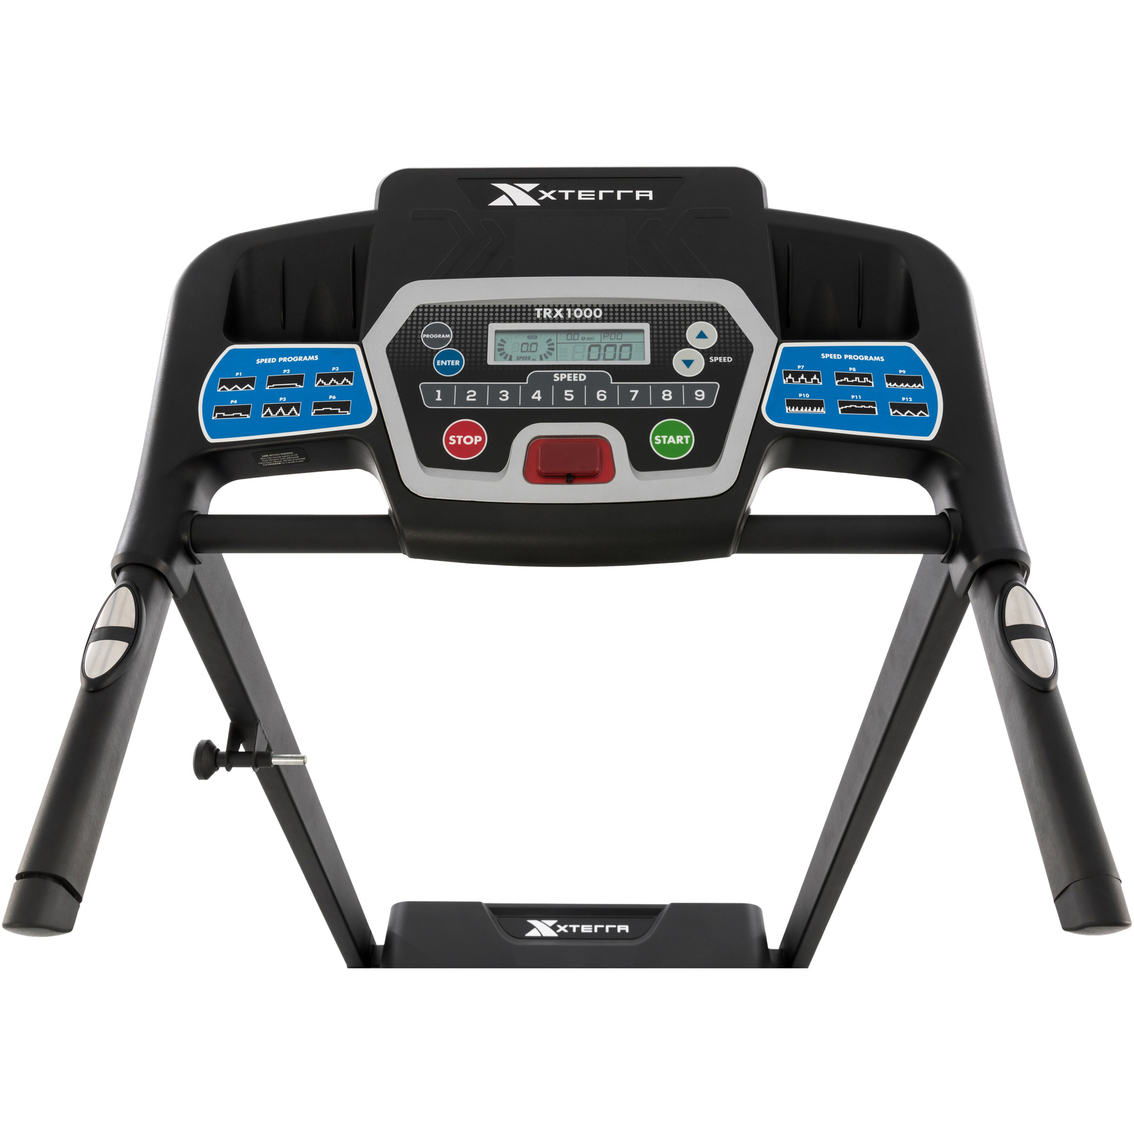 XTERRA Fitness TRX1000 Folding Treadmill - Image 5 of 10